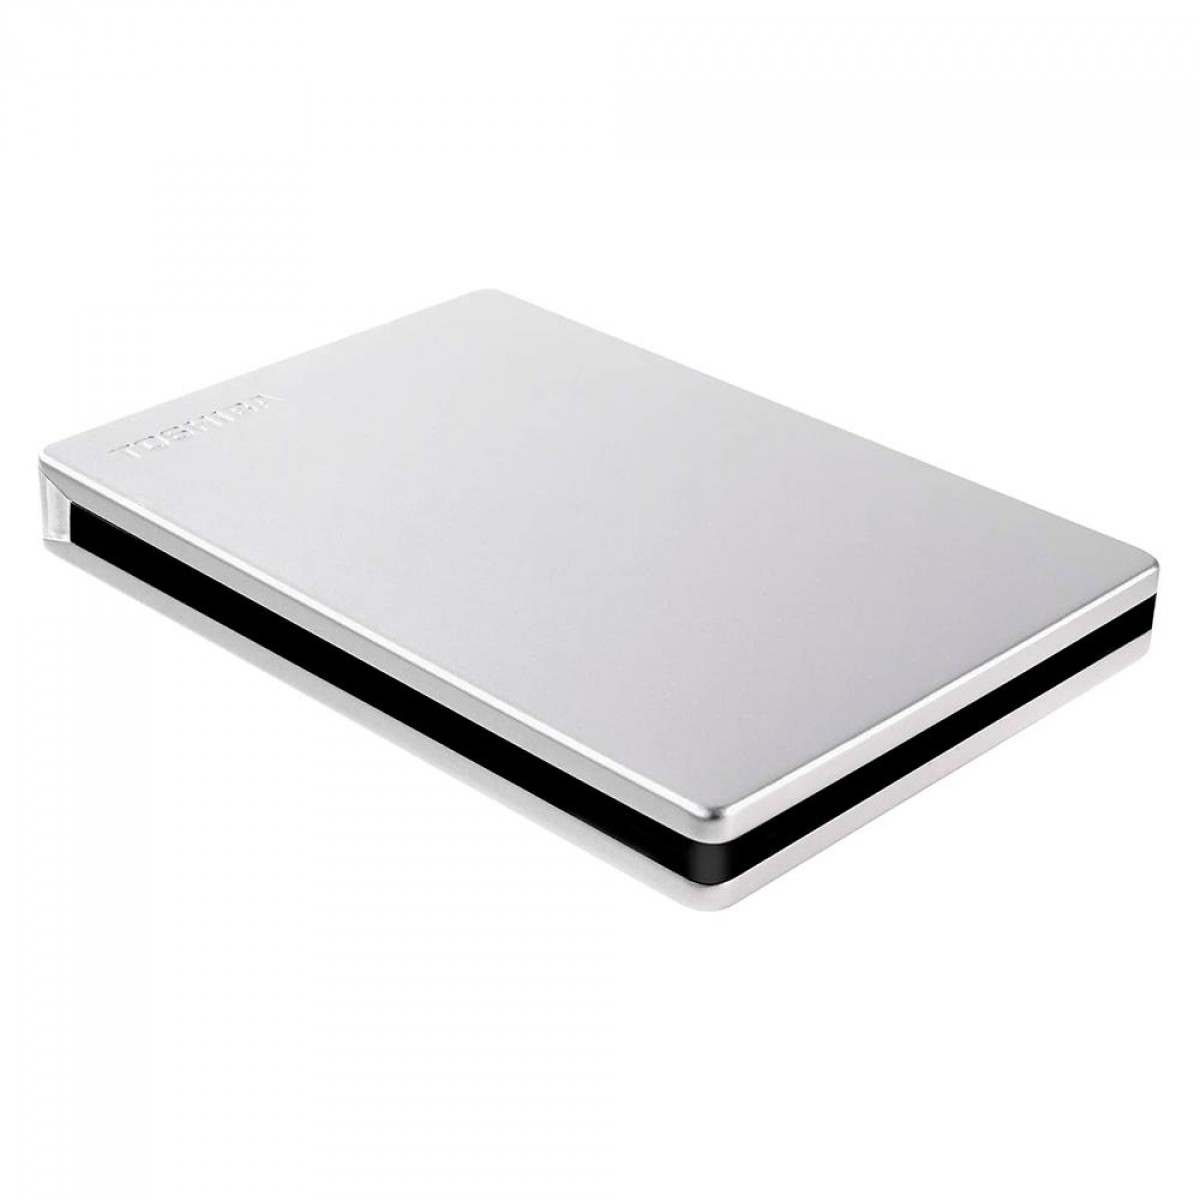 HD Externo Toshiba Canvio Slim 2TB, USB 3.0, Silver, Até 5Gb/s, HDTD320XS3EA